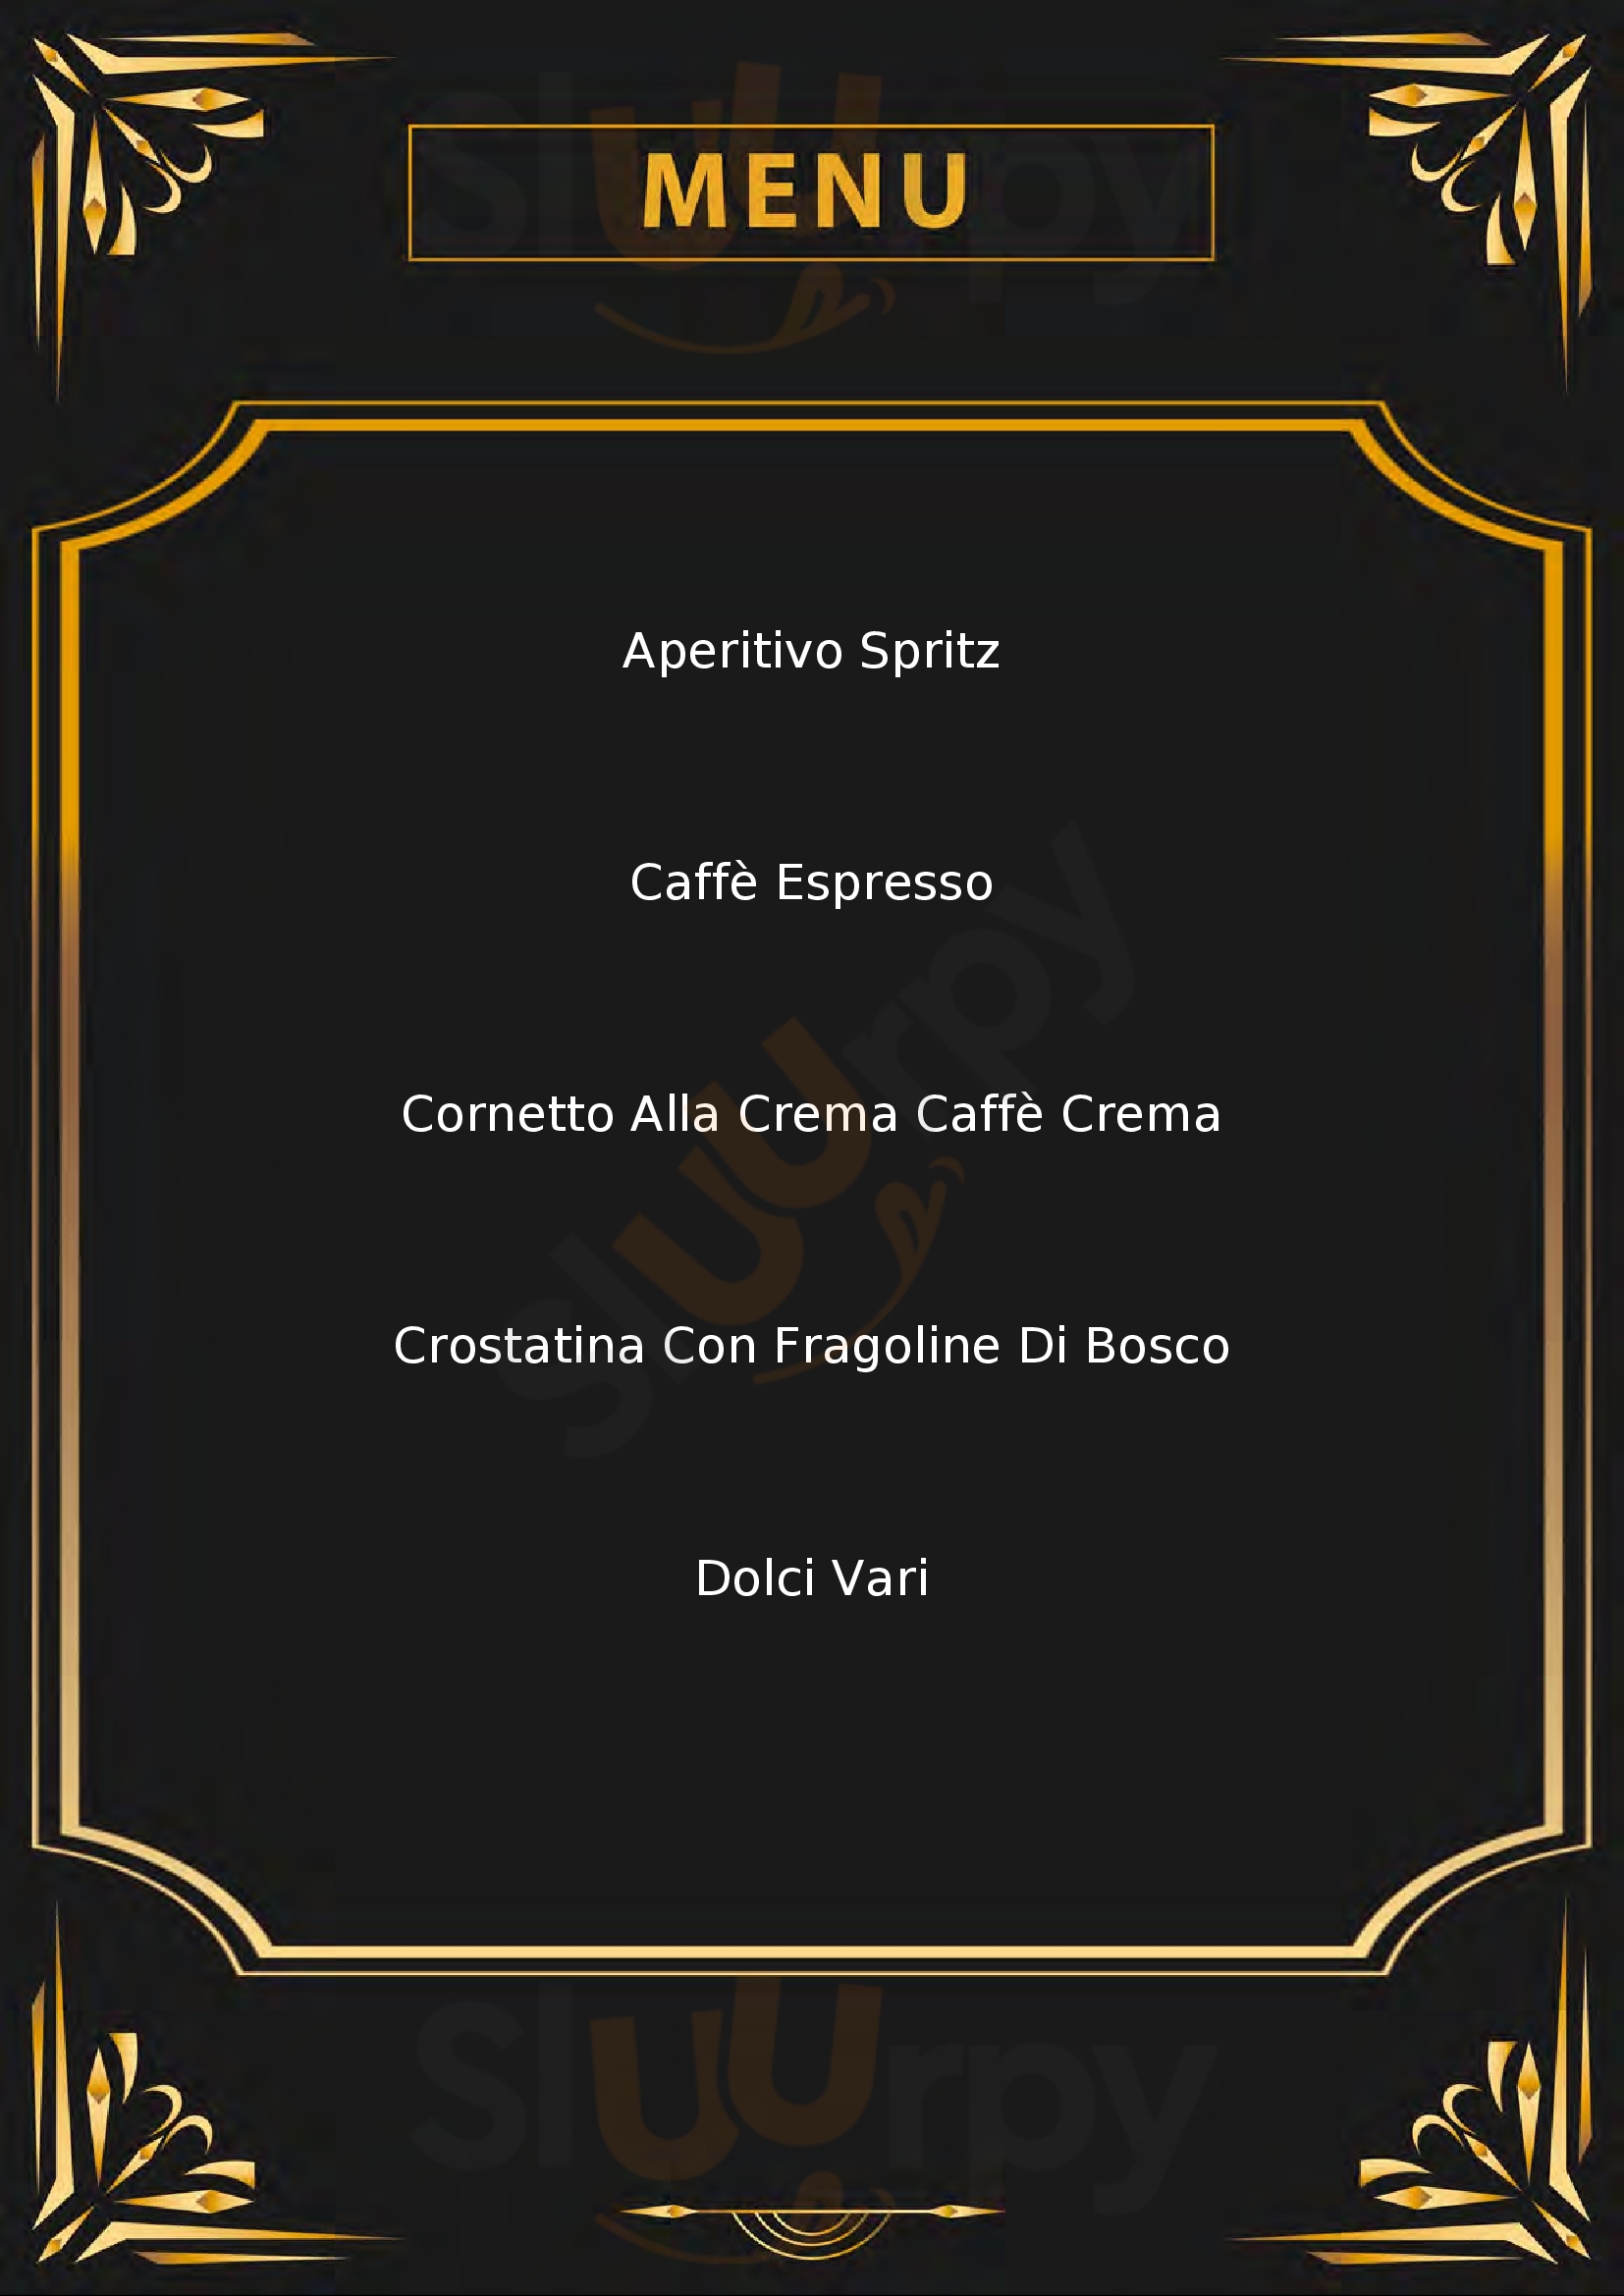 Cafe Garibaldi Sarno menù 1 pagina